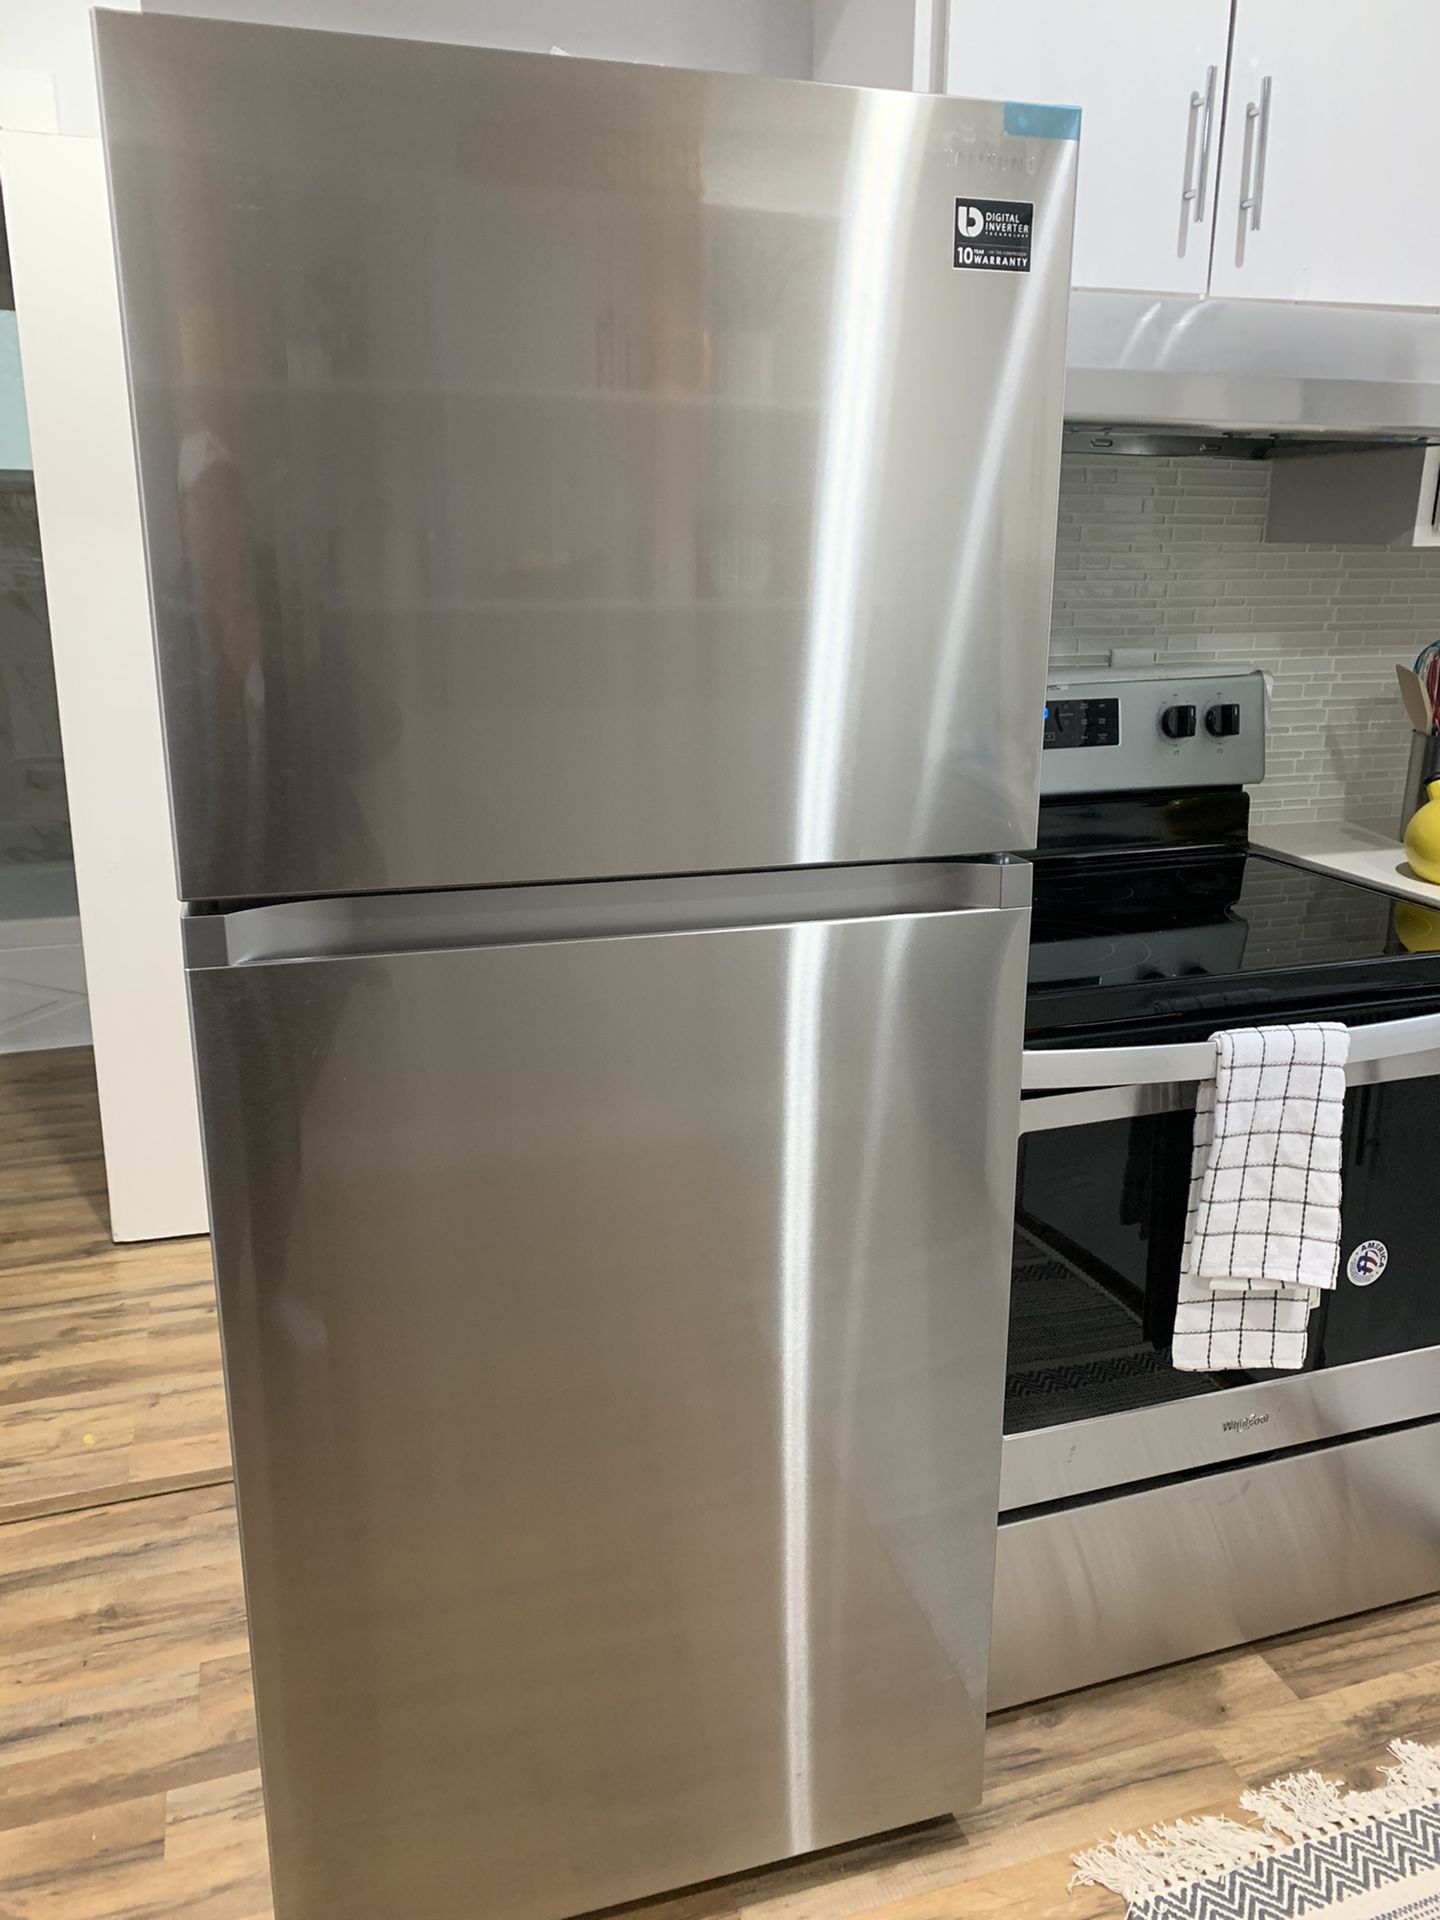 NEW Samsung 17.6 Cu. Ft. Stainless Steel Refrigerator